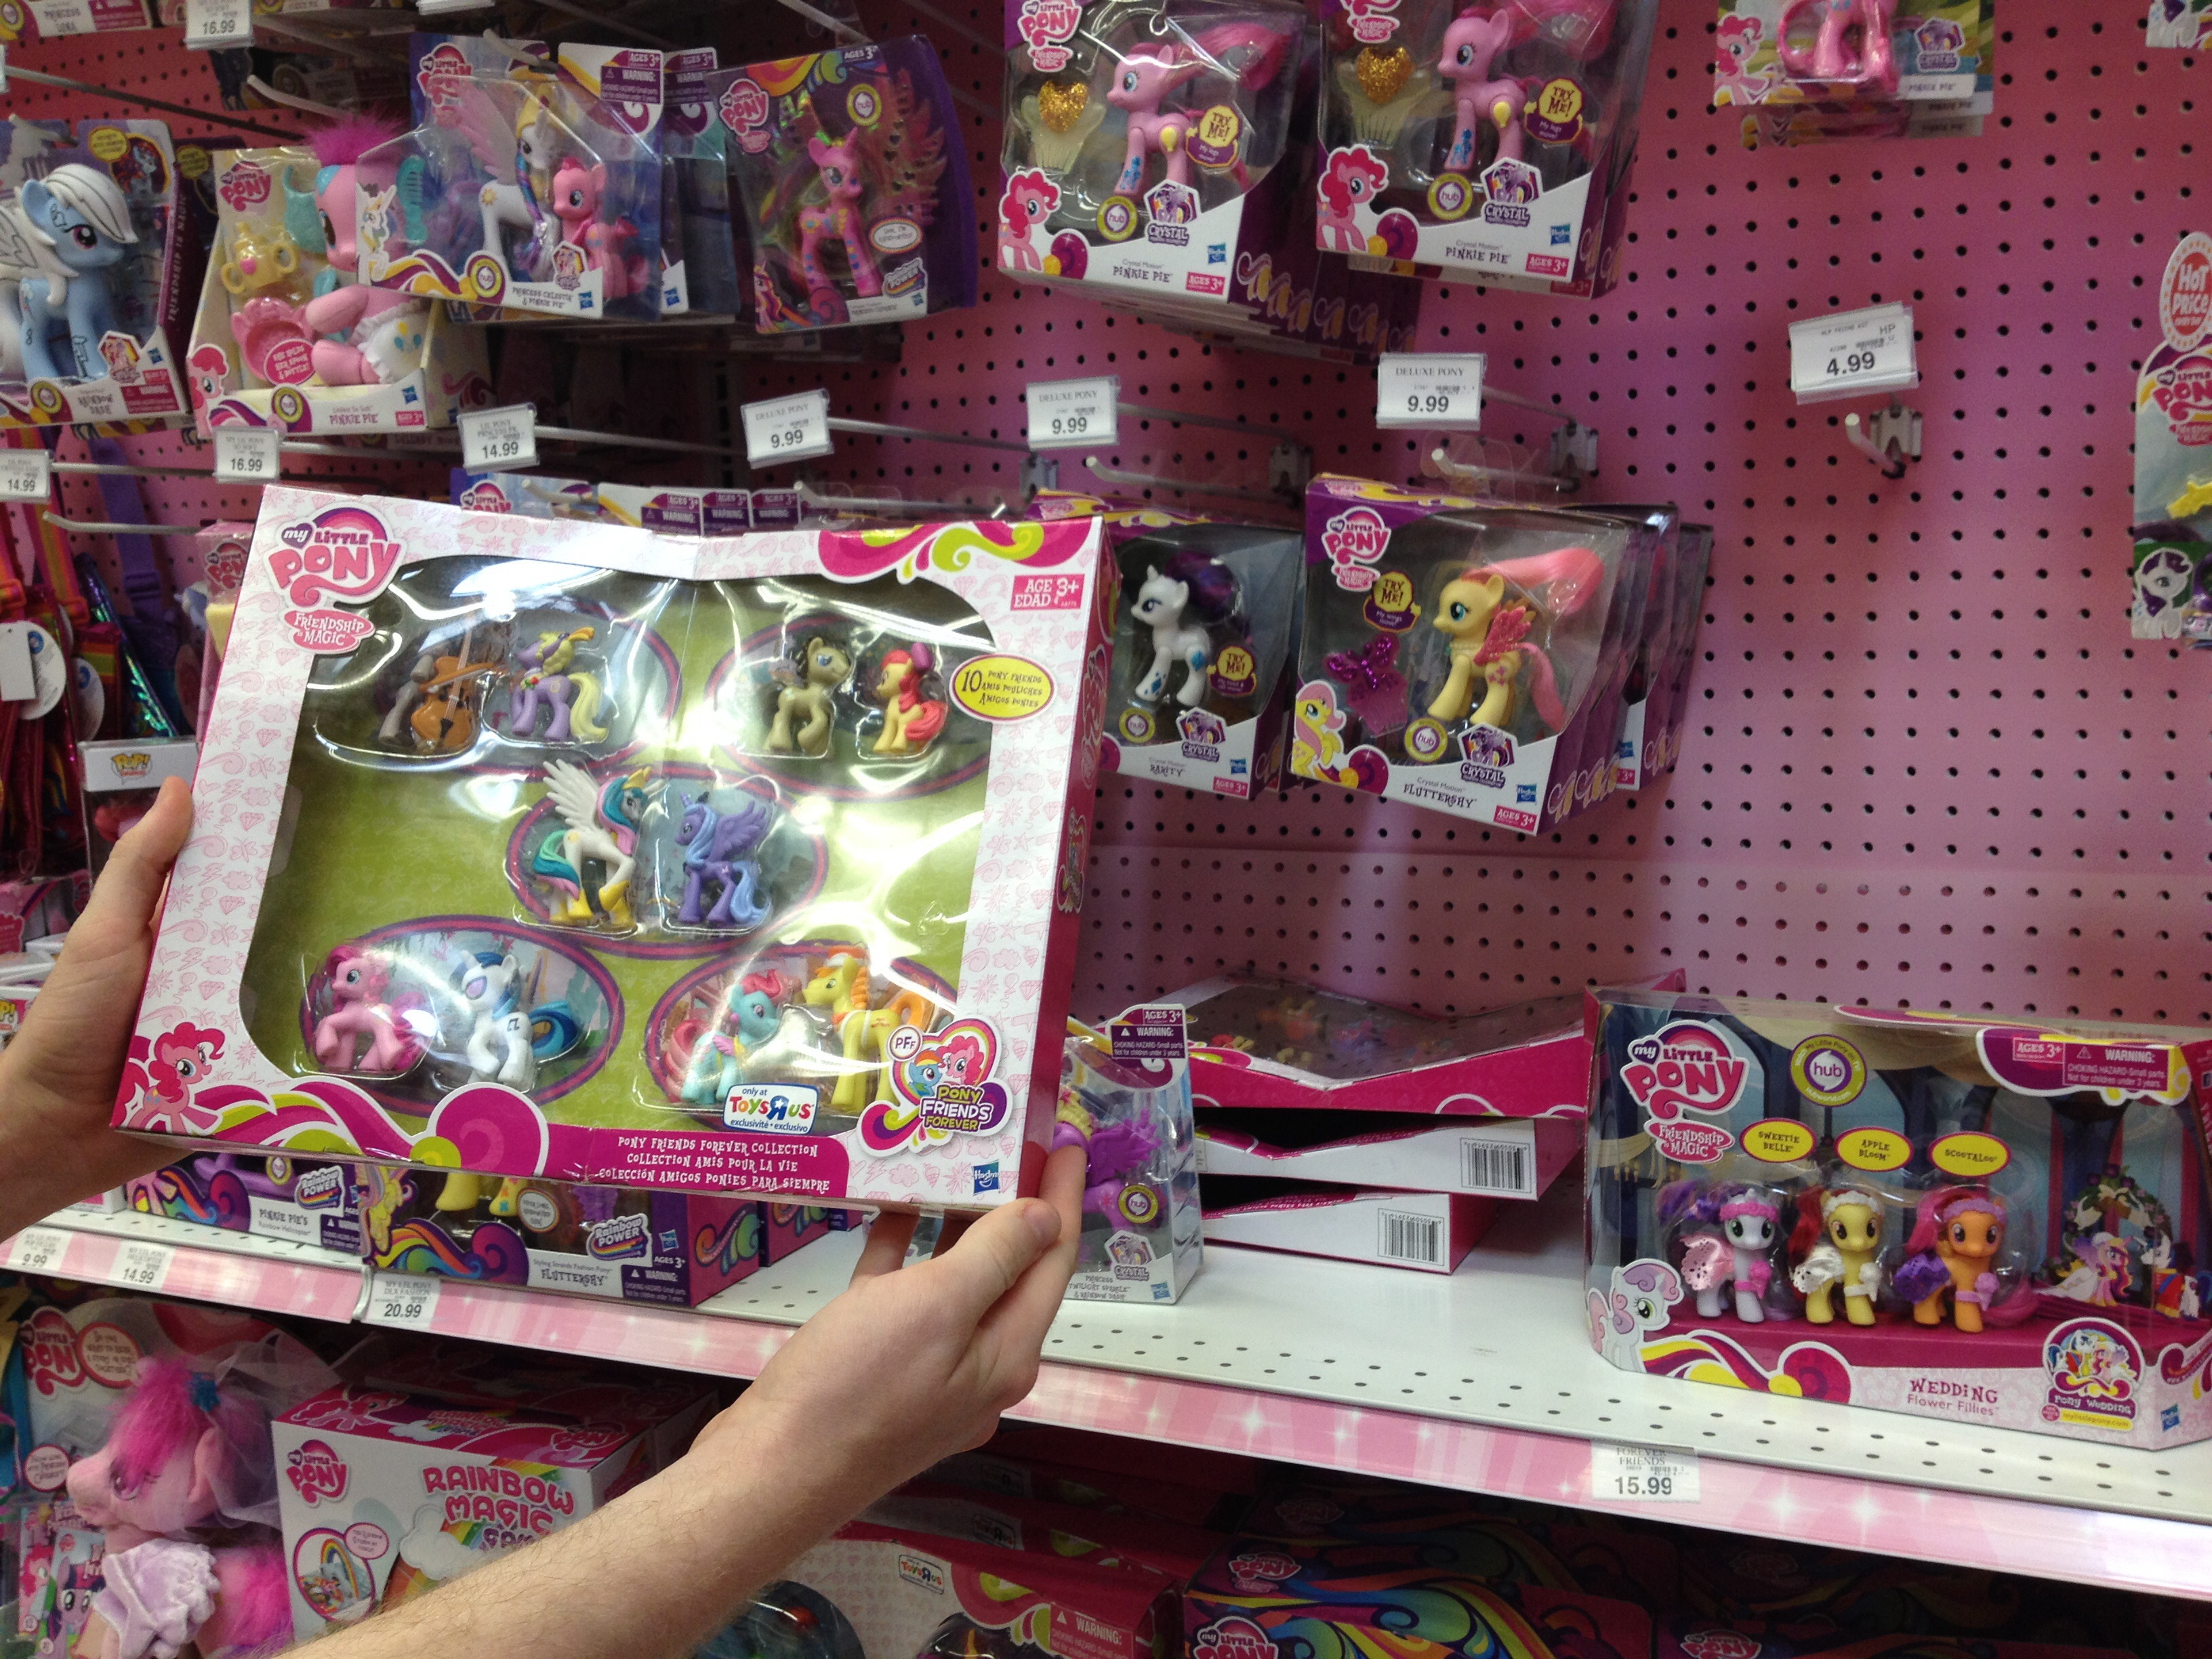 Toys R Us Pony Friends Forever mini figures set has hit 